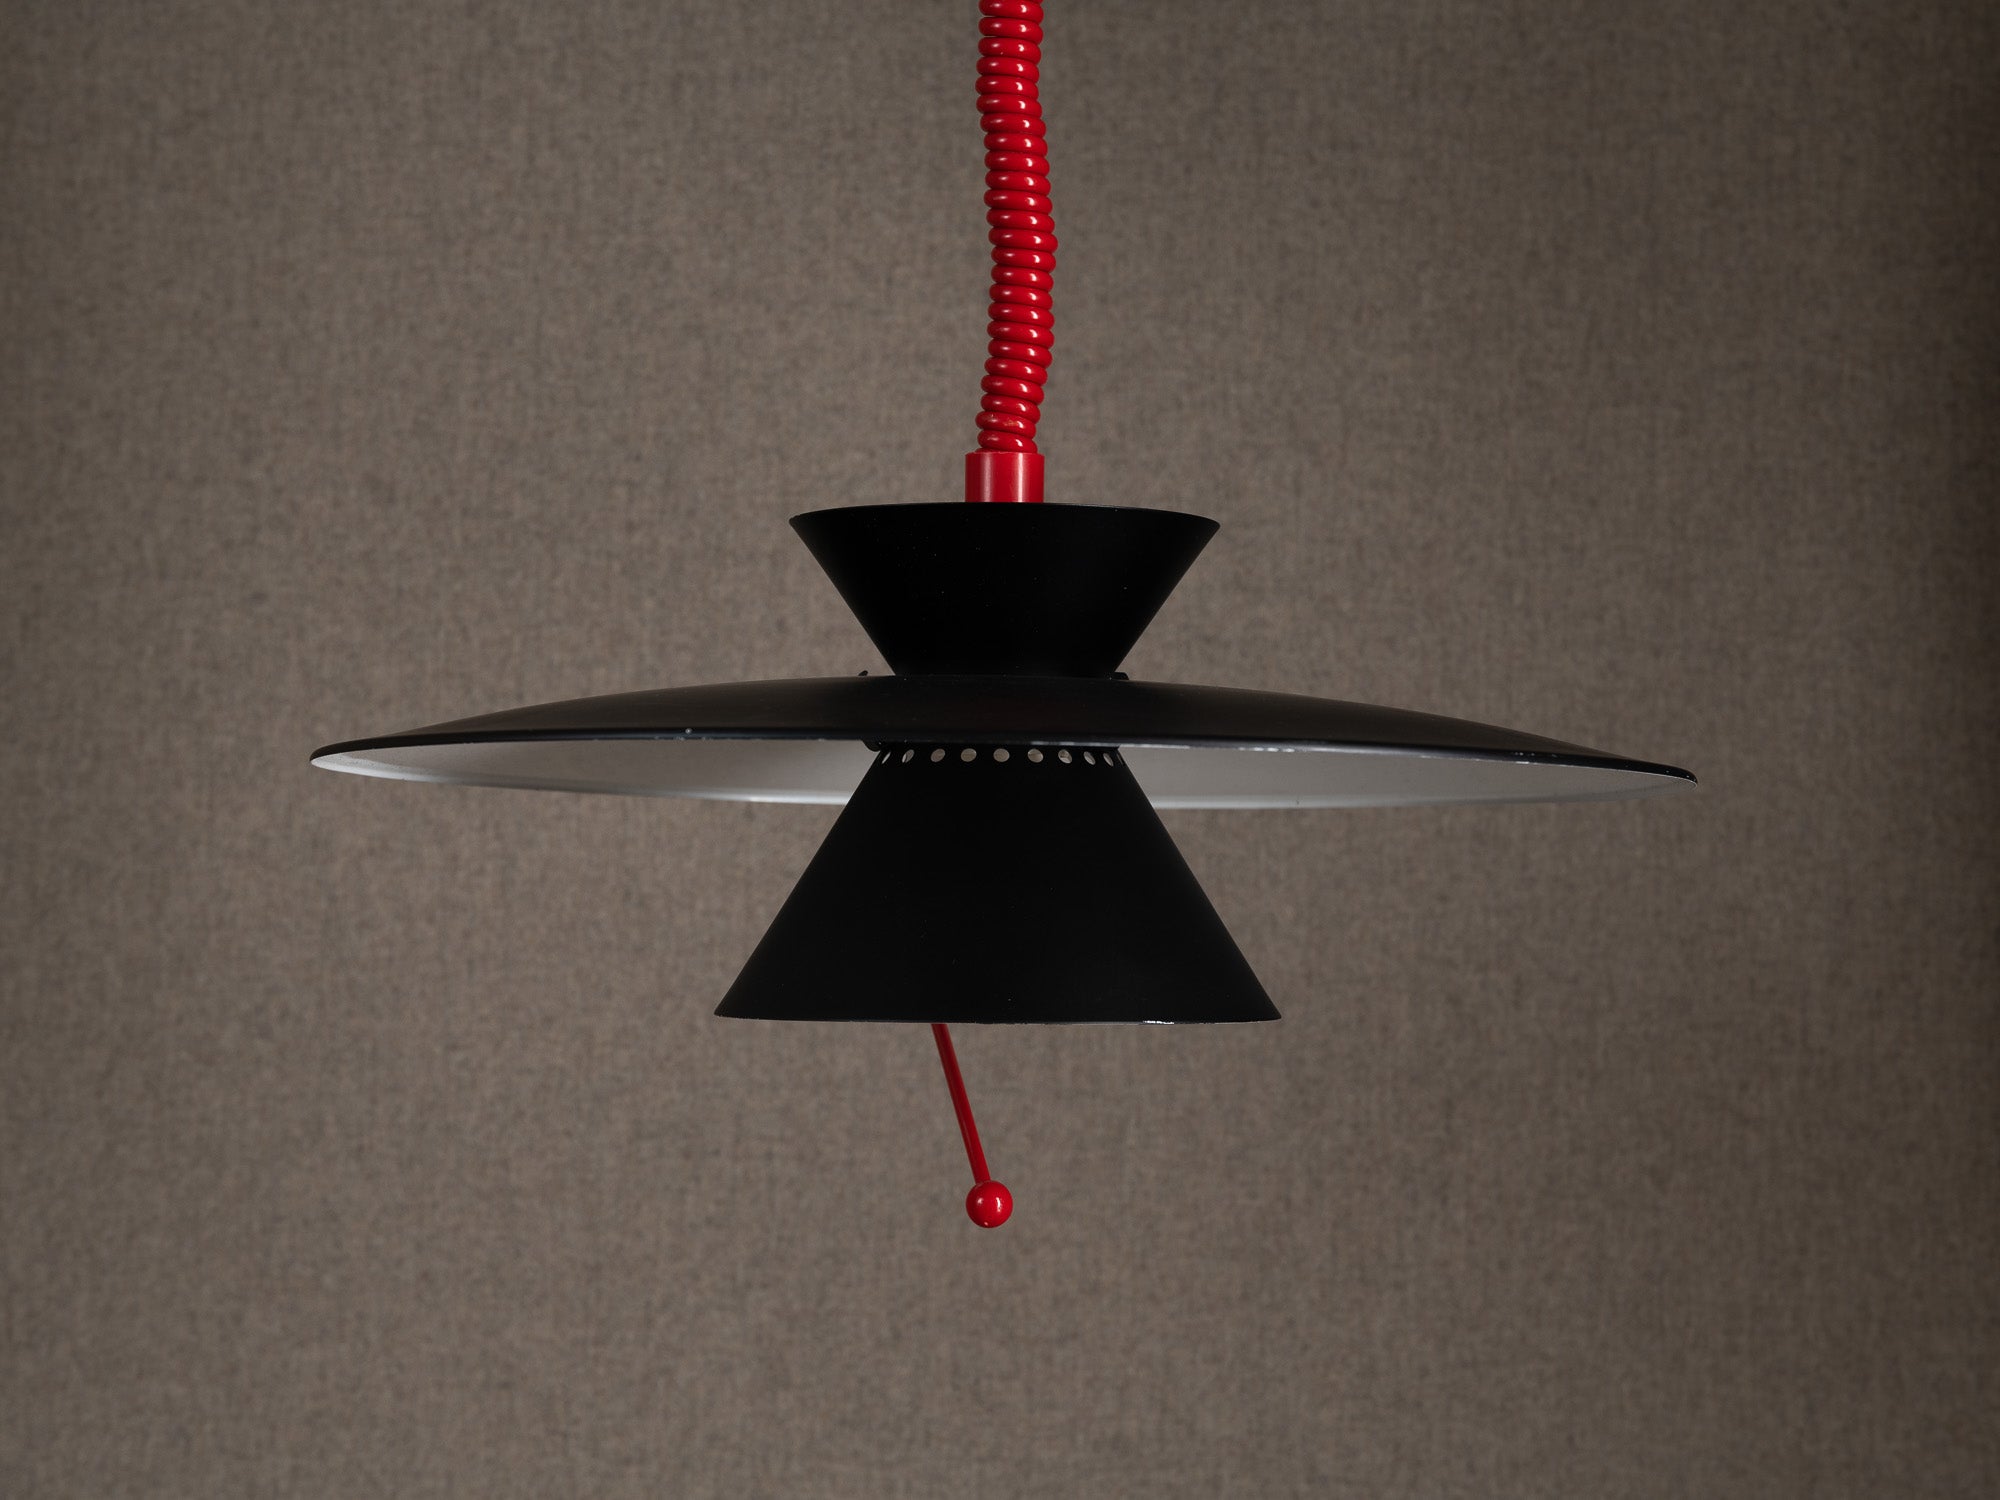 Lampe / Plafonnier postmoderne en métal rouge et noir Oy Lival AB, Finlande (années 1980)..Postmodern lamp / ceiling lamp in red and black metal Oy Lival AB, Finland (1980s)